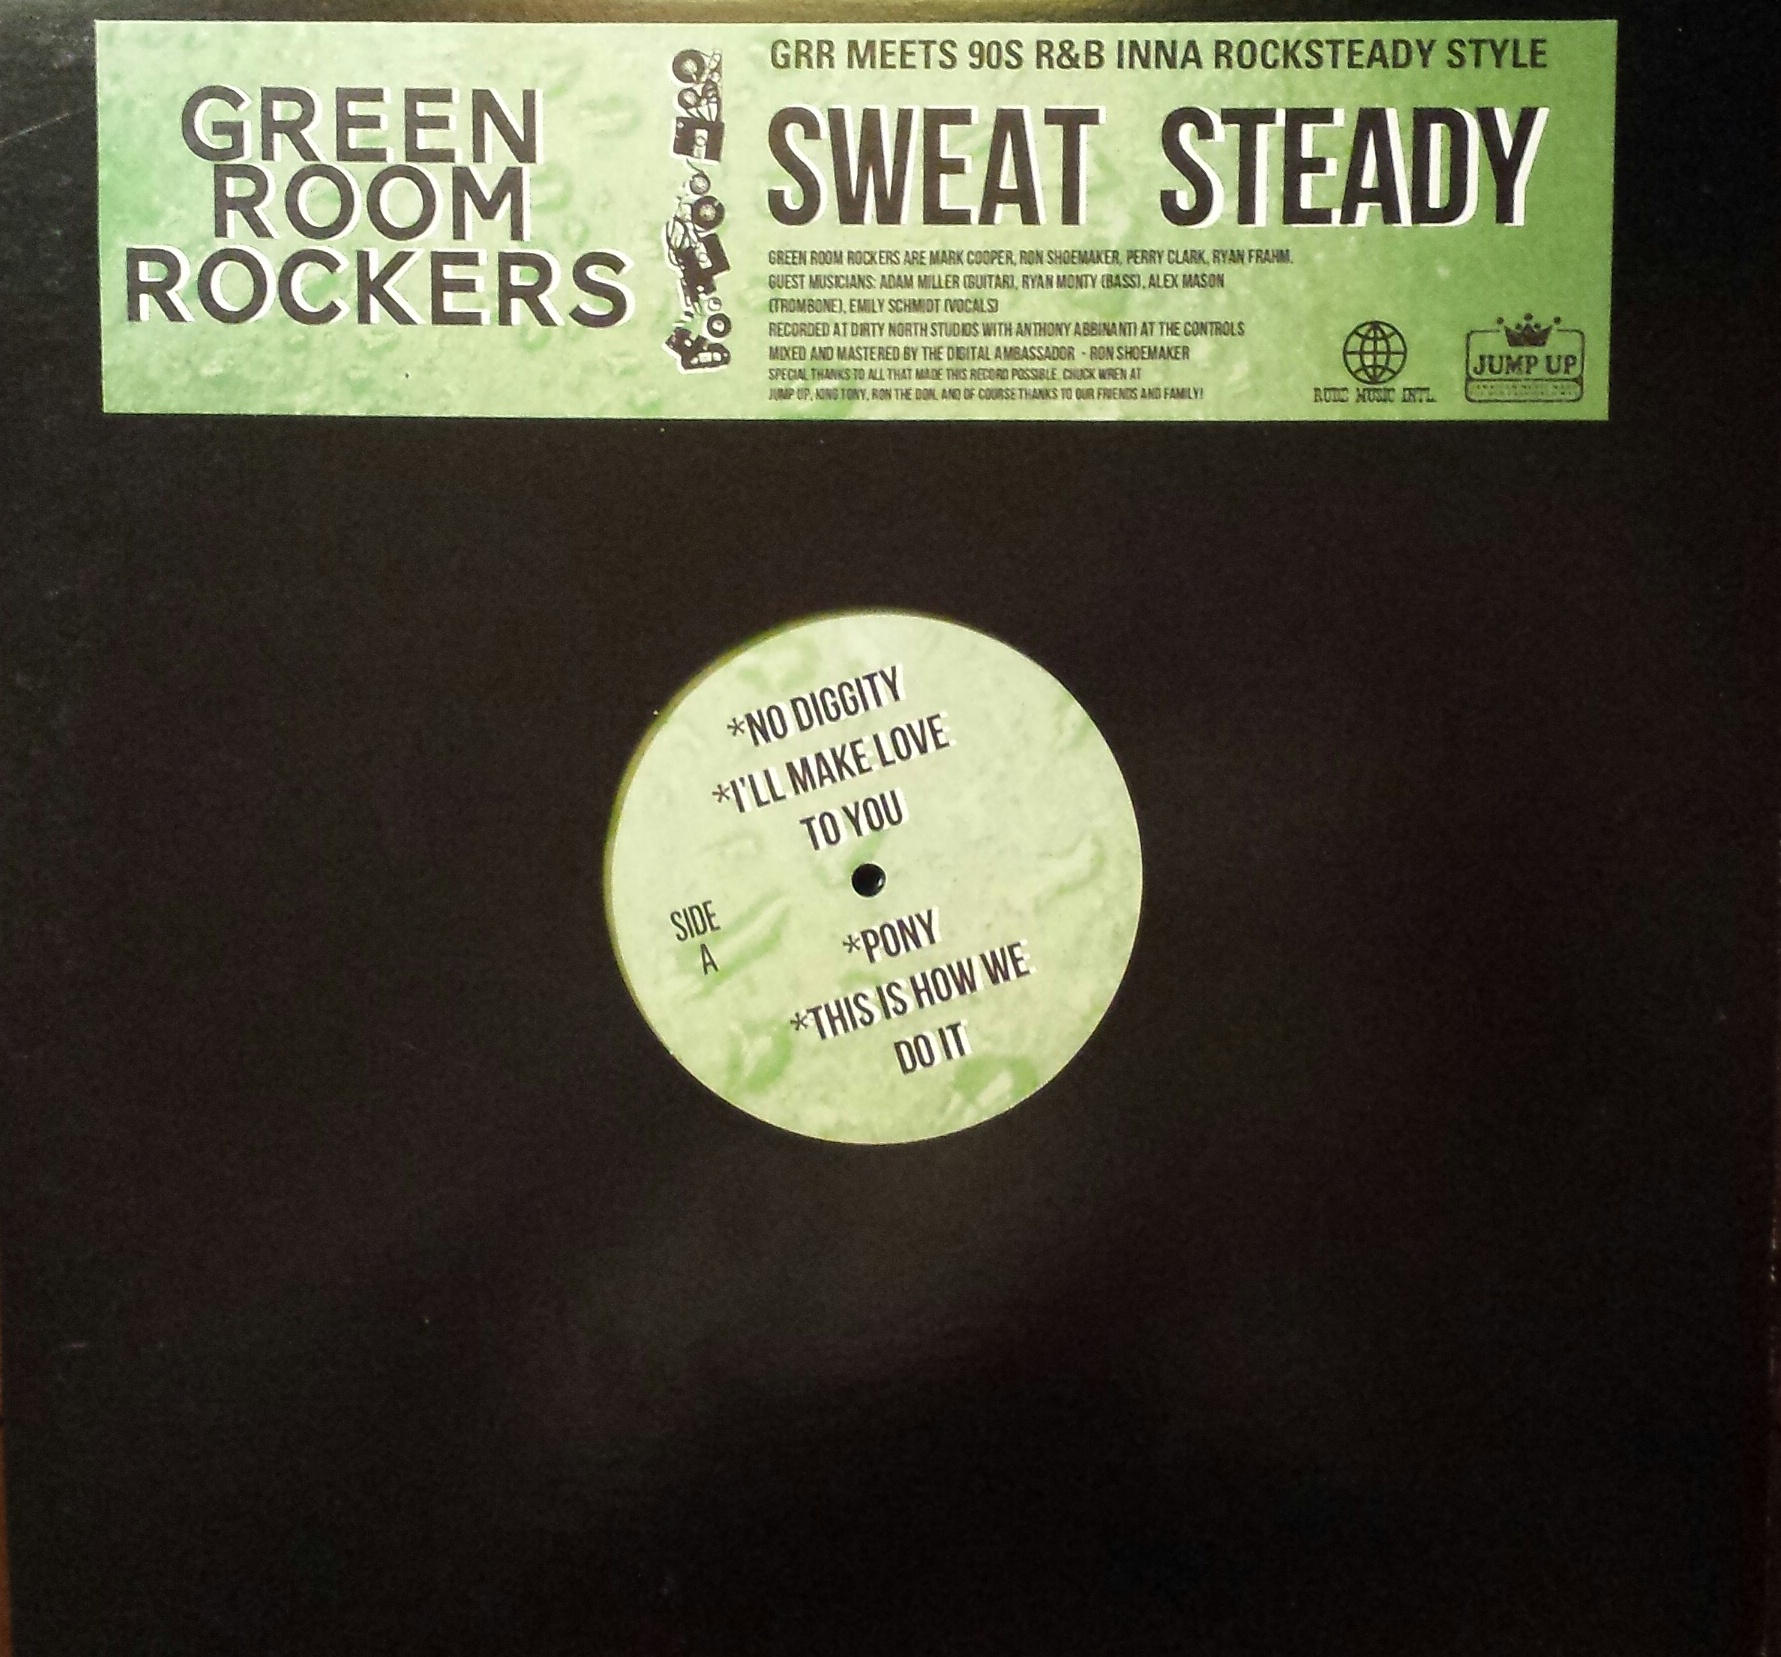 Green Room Rockers/SWEAT STEADY (R&B) LP